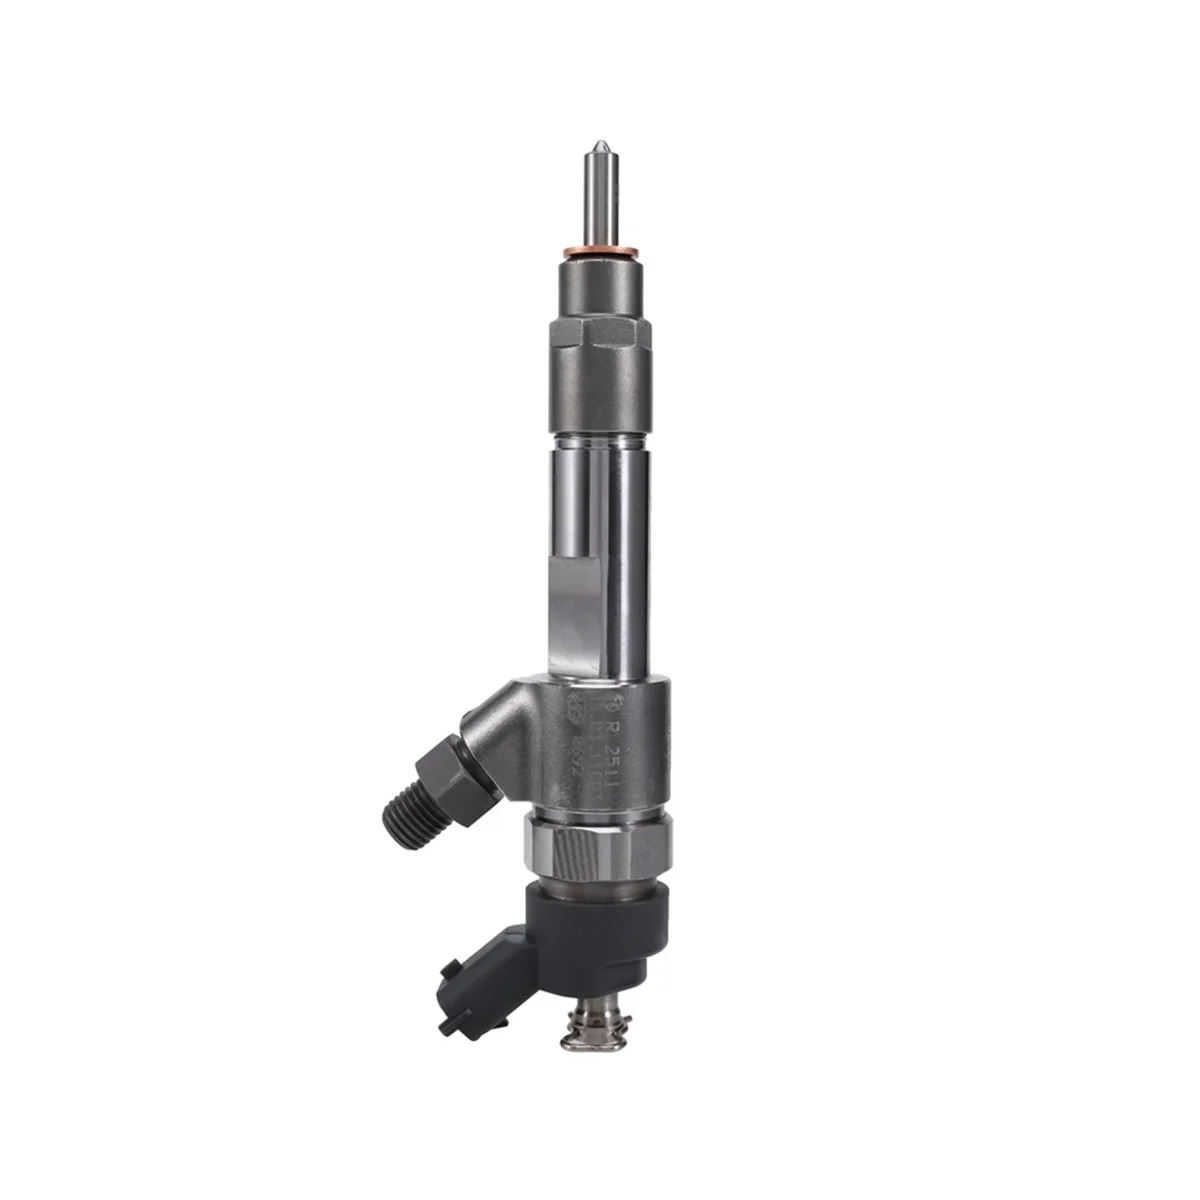 

0445120002 Crude Oil Fuel Injector Nozzle for Bosch for Citroen Jumper / Iveco Daily / Peugeot Boxer / Fiat Ducato 2.8